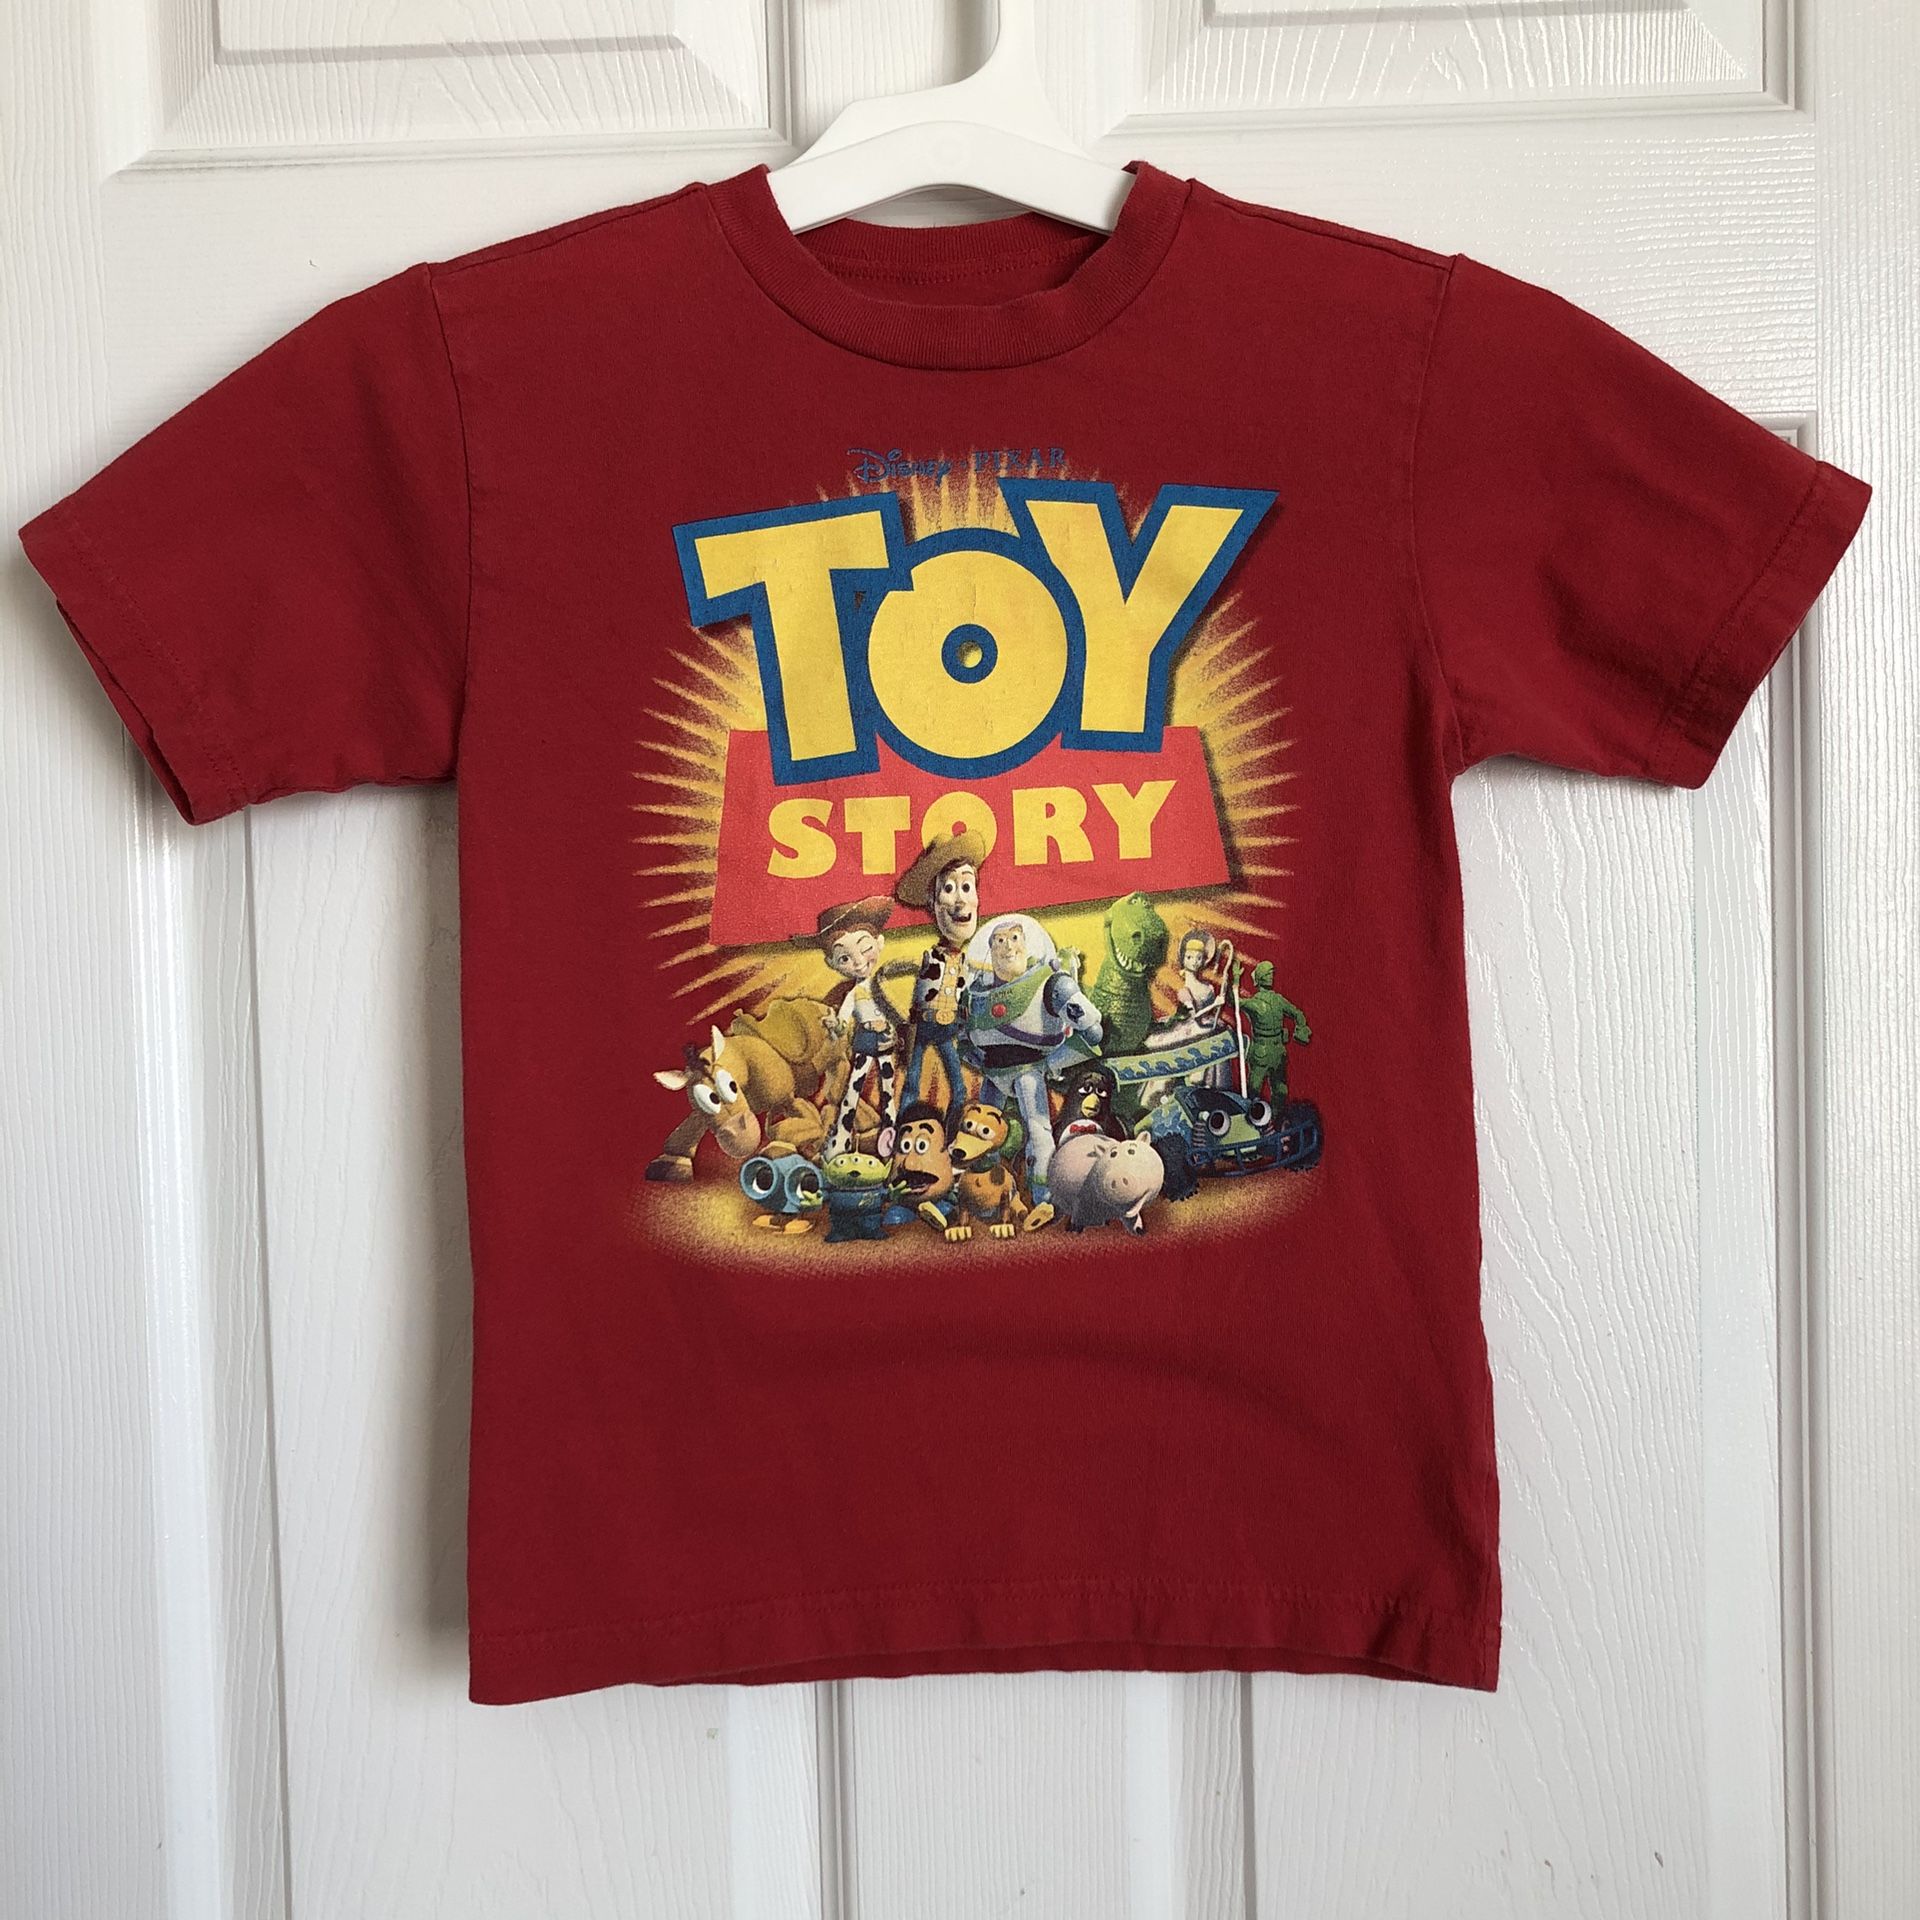 Toy Story kids shirt size small 5/6